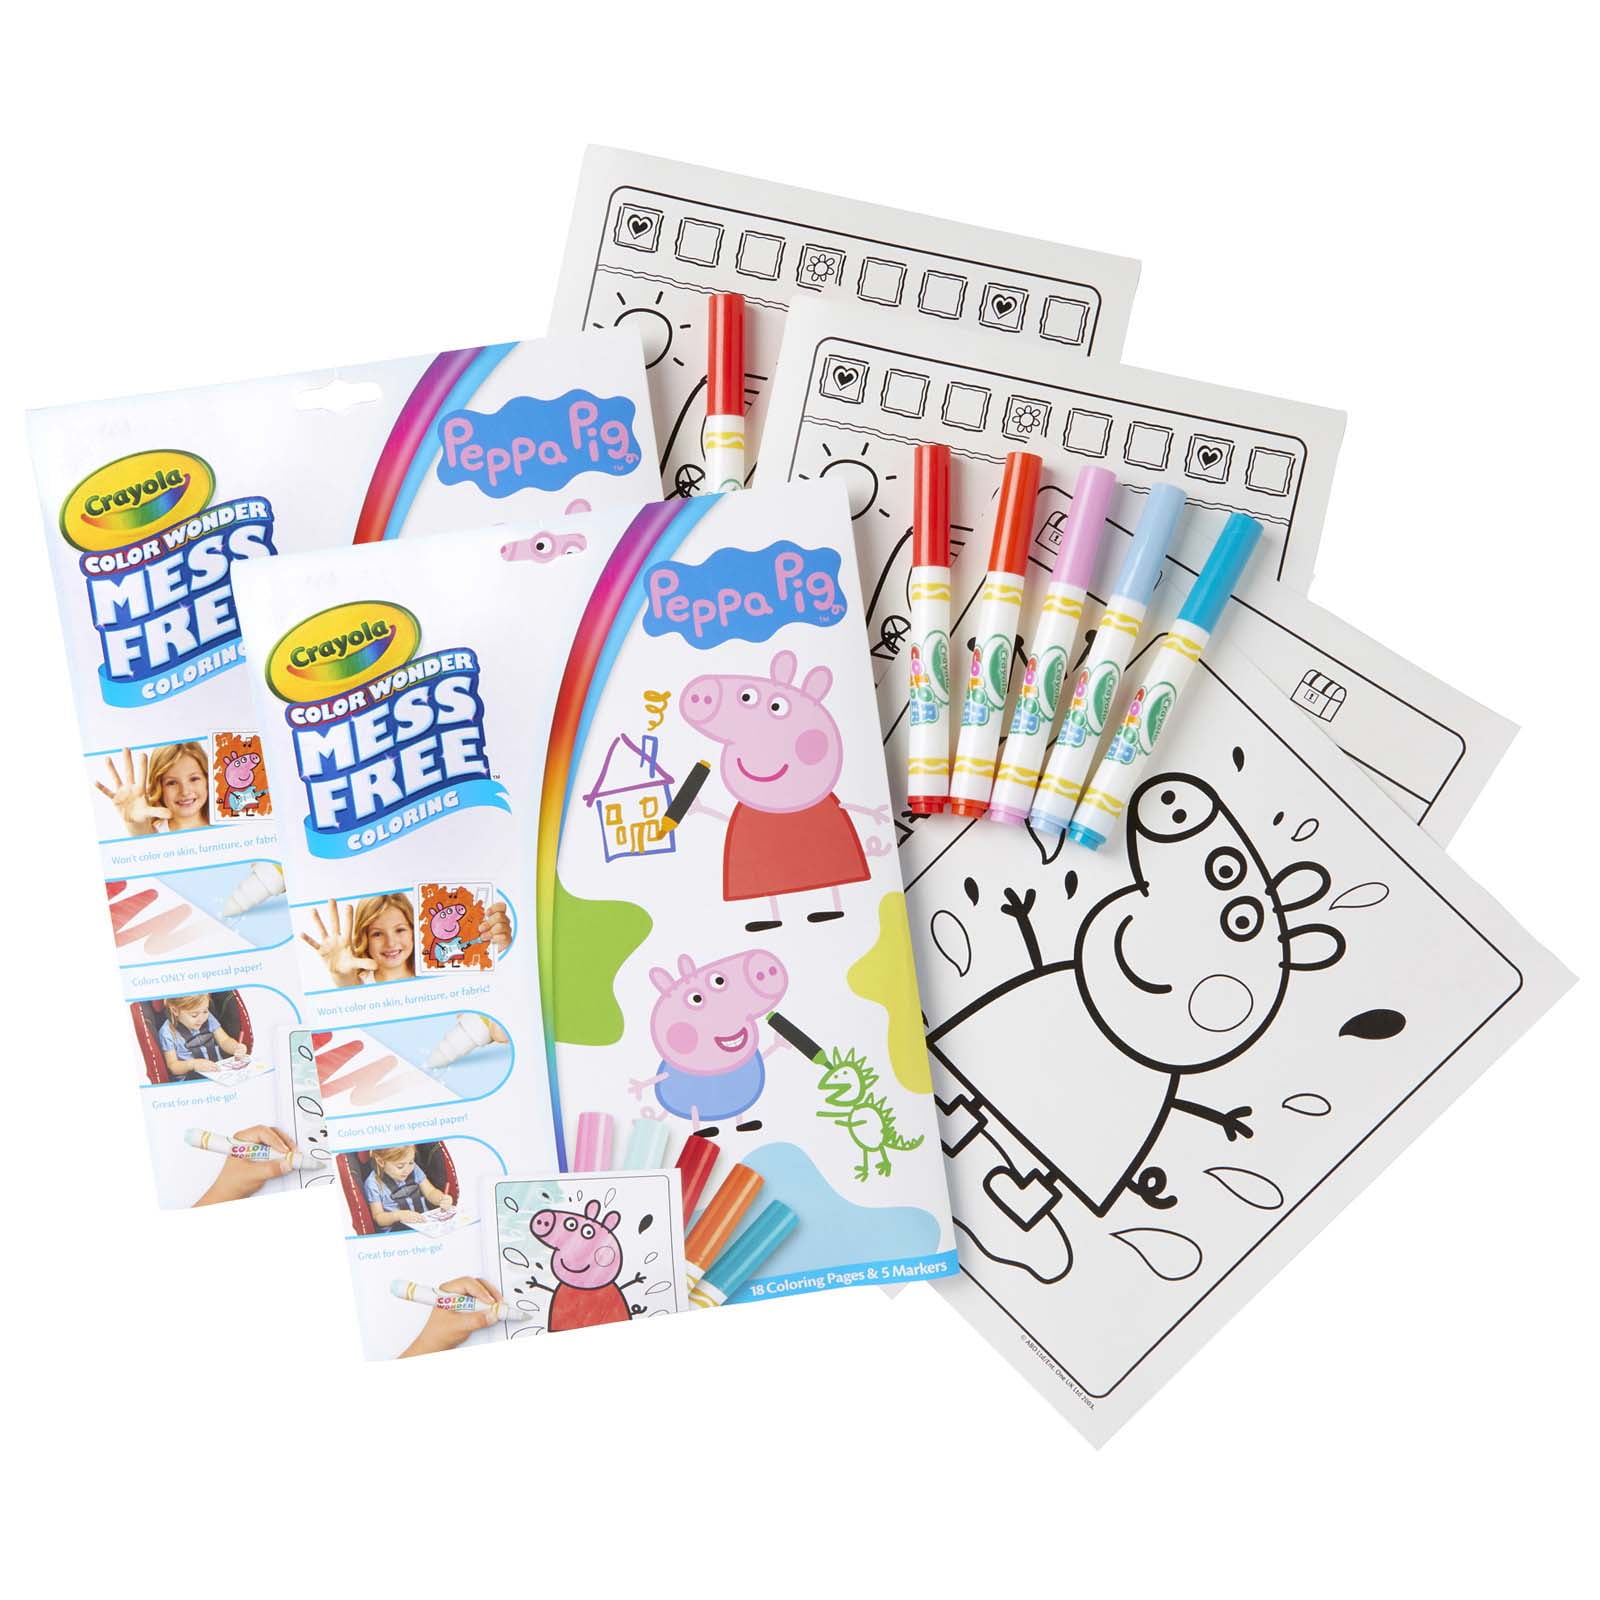 Crayola Color Wonder Mess Free™ Coloring Pad, 1 ct - City Market